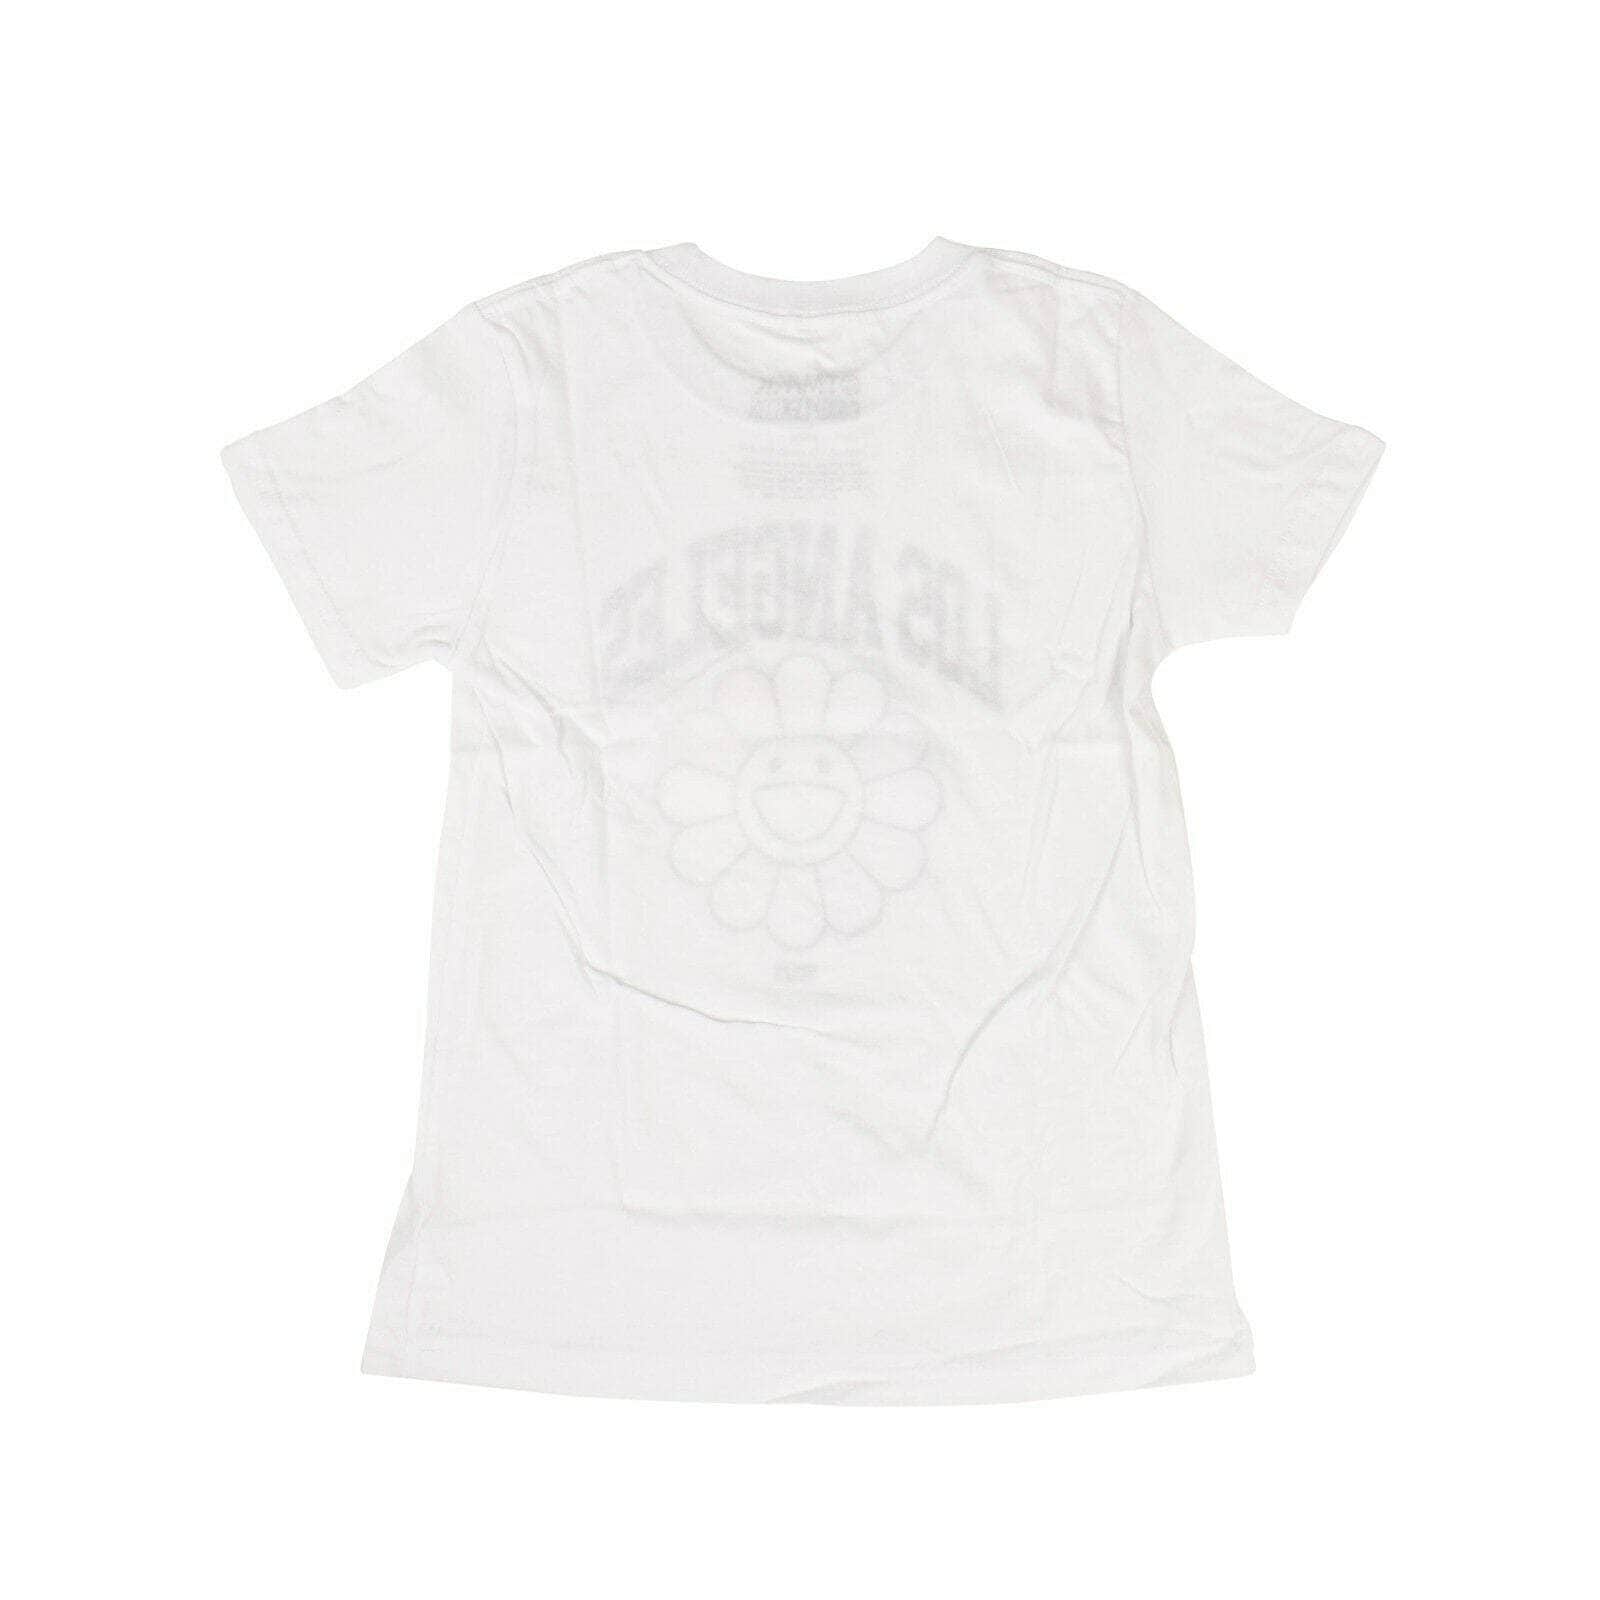 Takashi Murakami Kid's T-Shirts TAKASHI MURAKAMI x COMPLEXCON Youth Los Angeles Flower T-Shirt - White